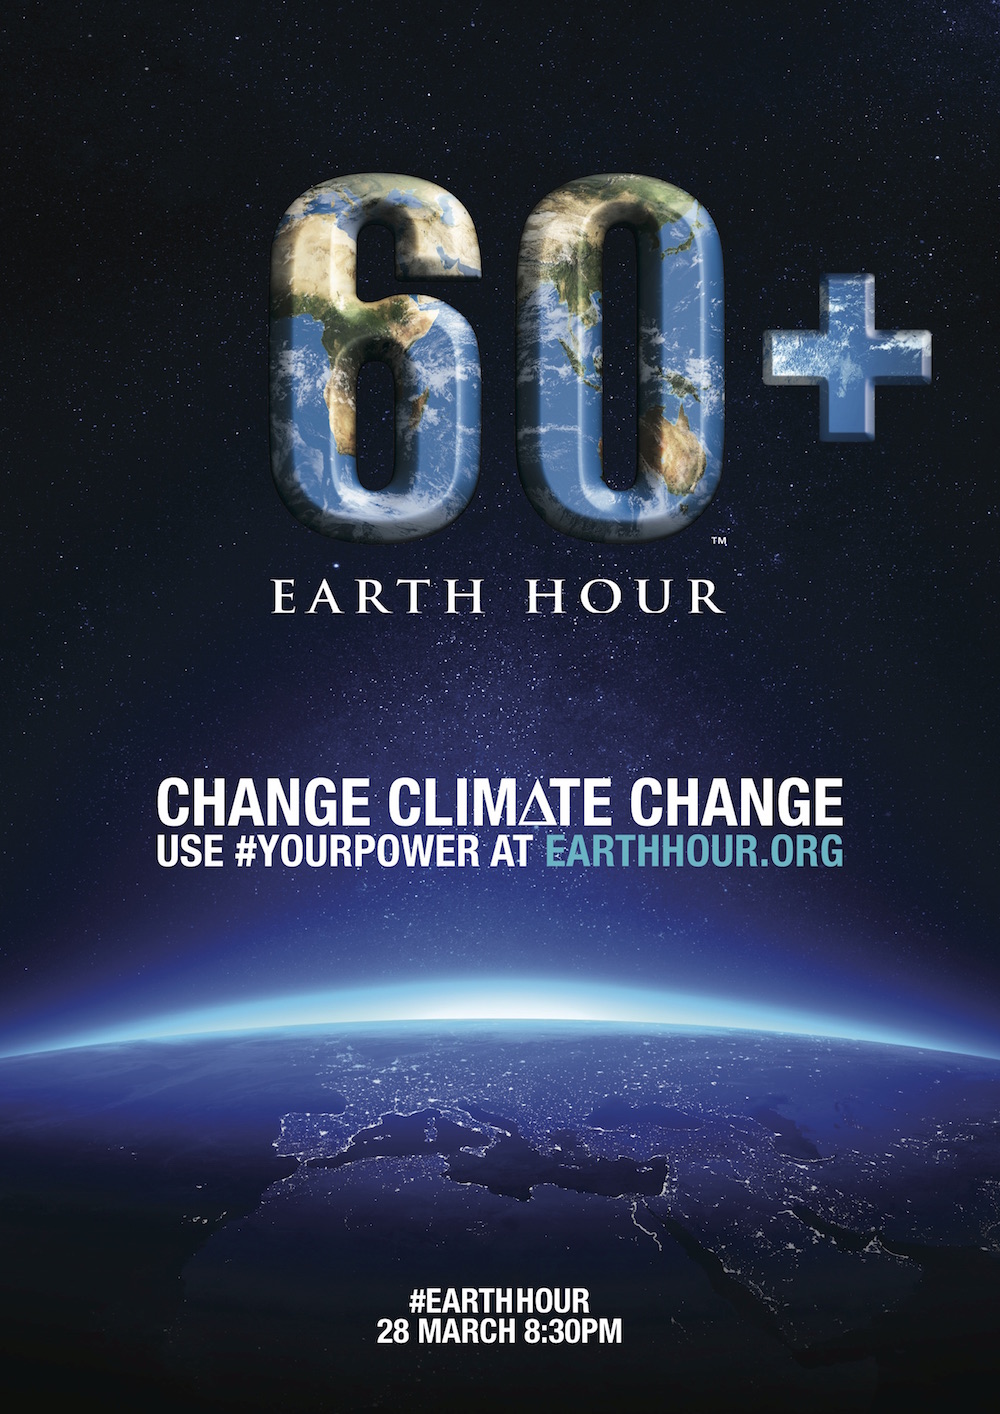 Earth Hour 2015